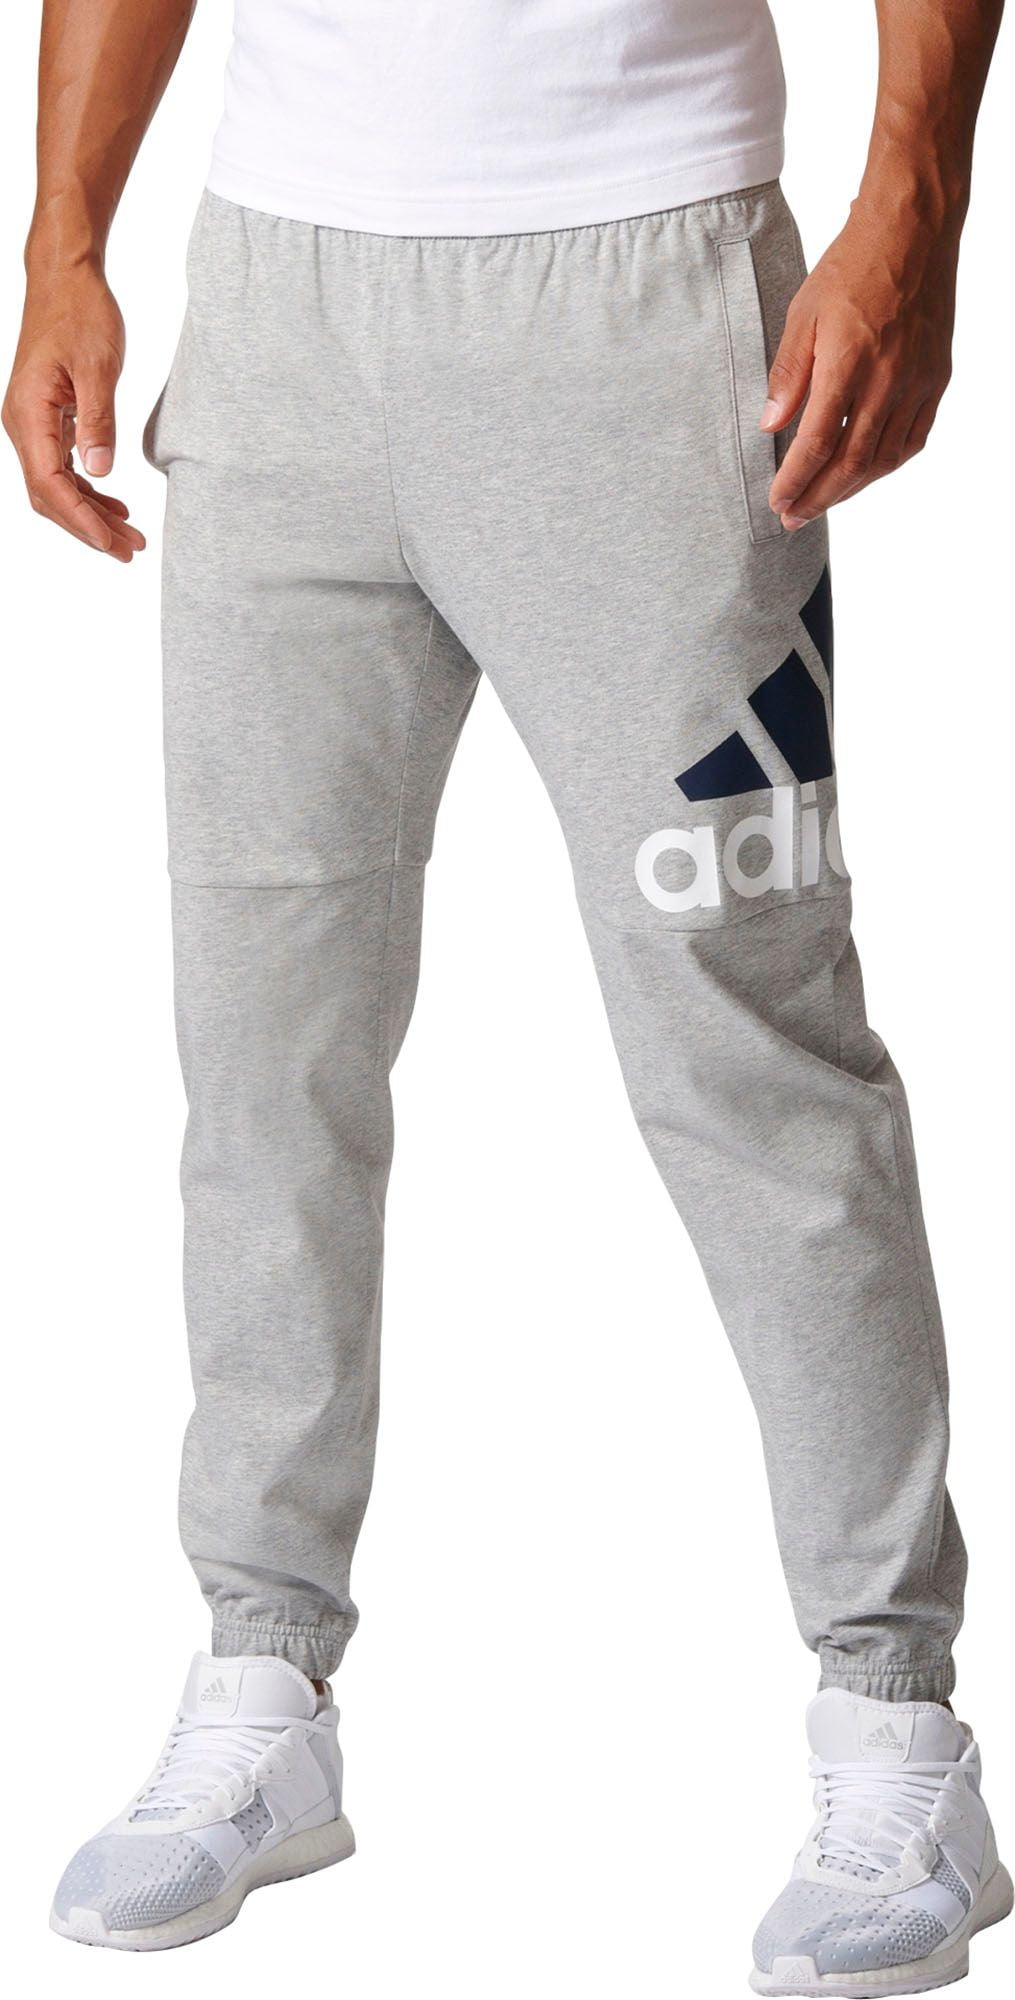 Adidas Essentials Performance Logo Pants - Heather/White/Black XL Medium - Mens Grey 